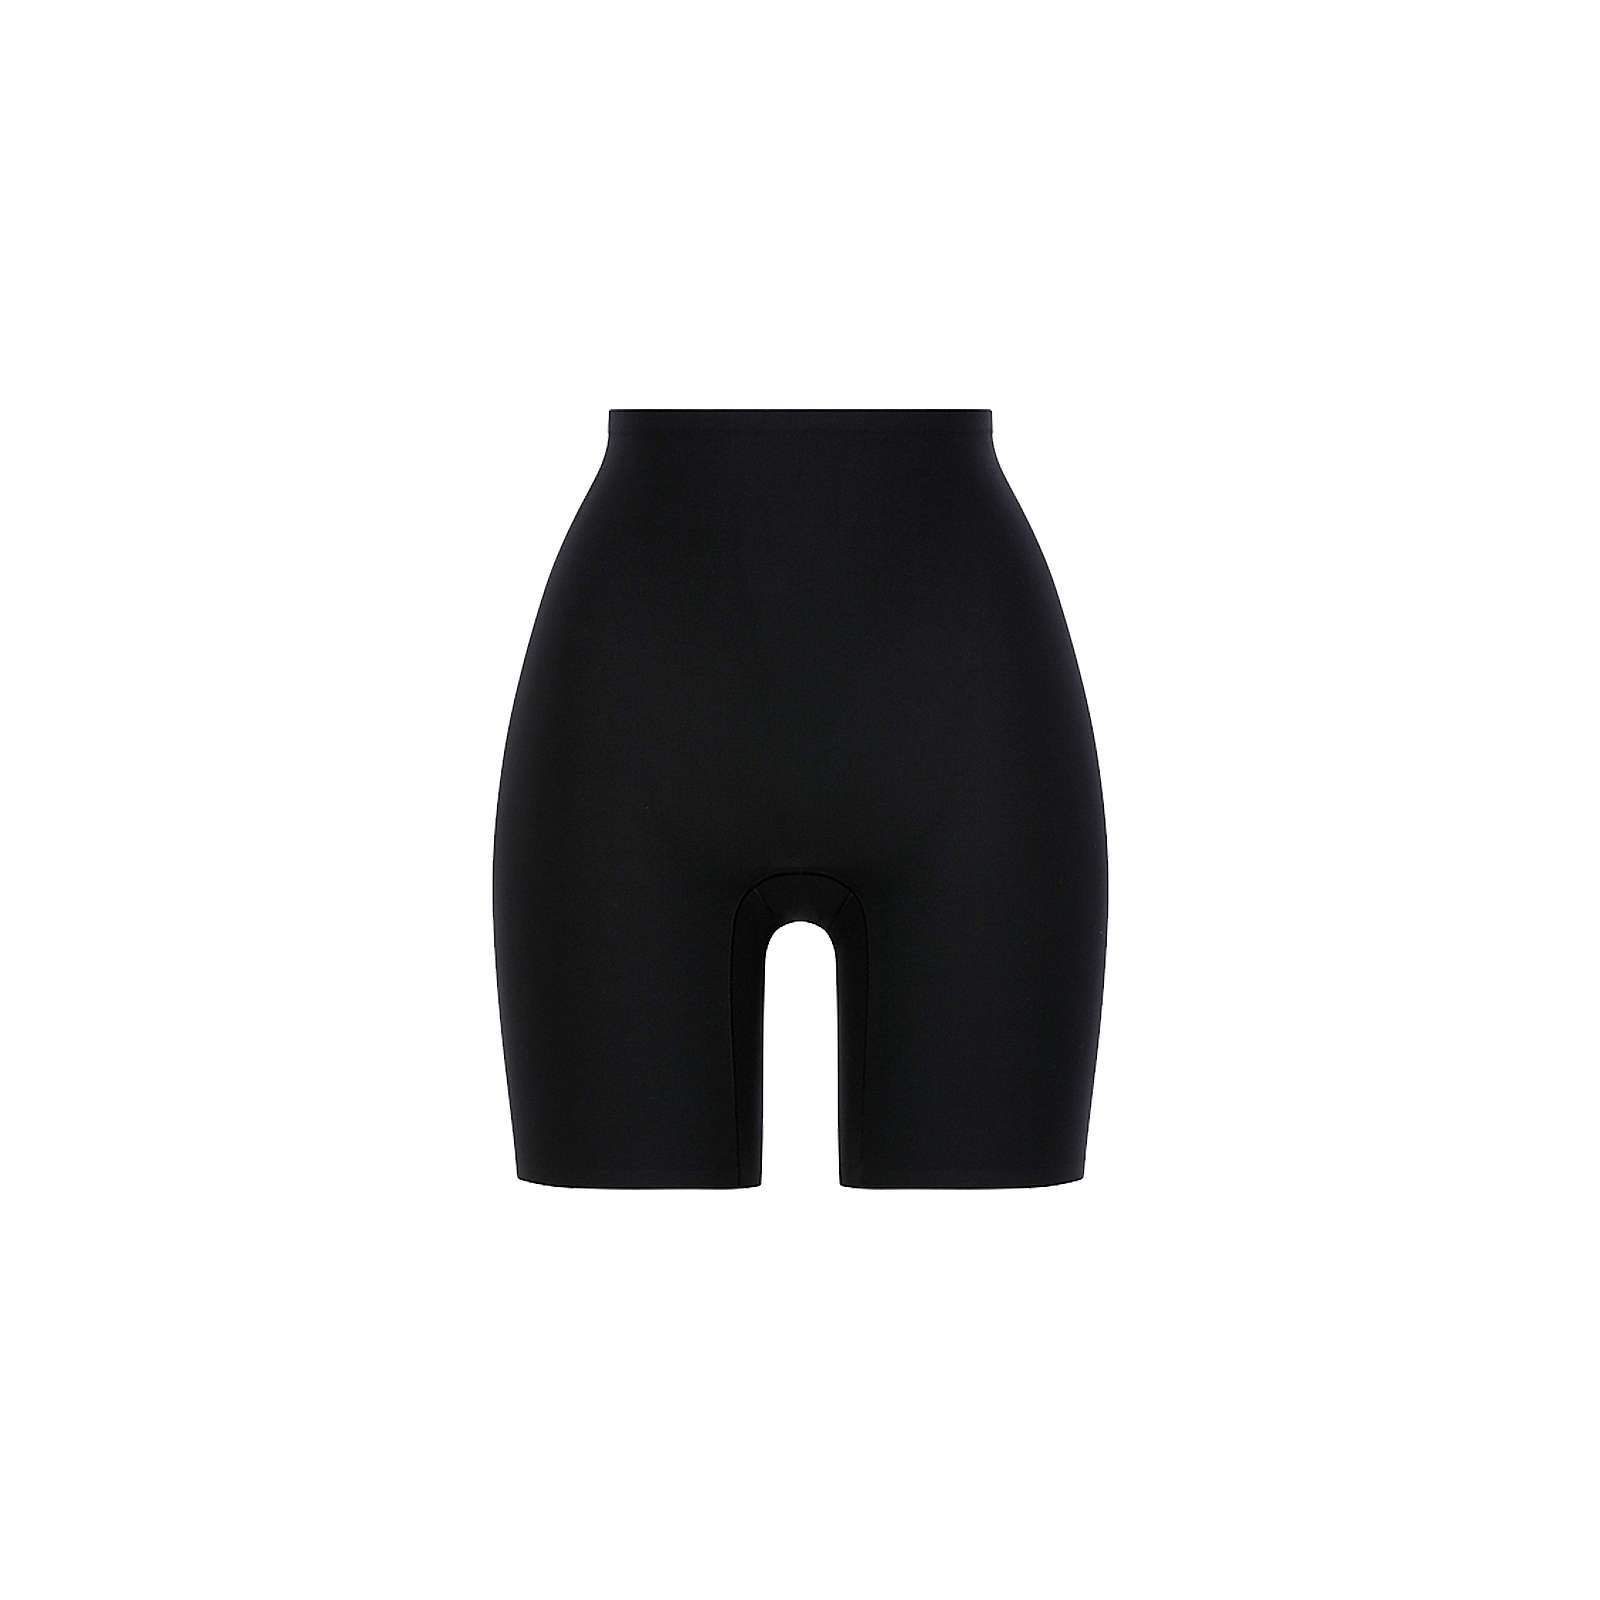 Radler-Pants - Softstretch, nahtlos, unsichtbar, Einheitsgröße 36-44 Panties